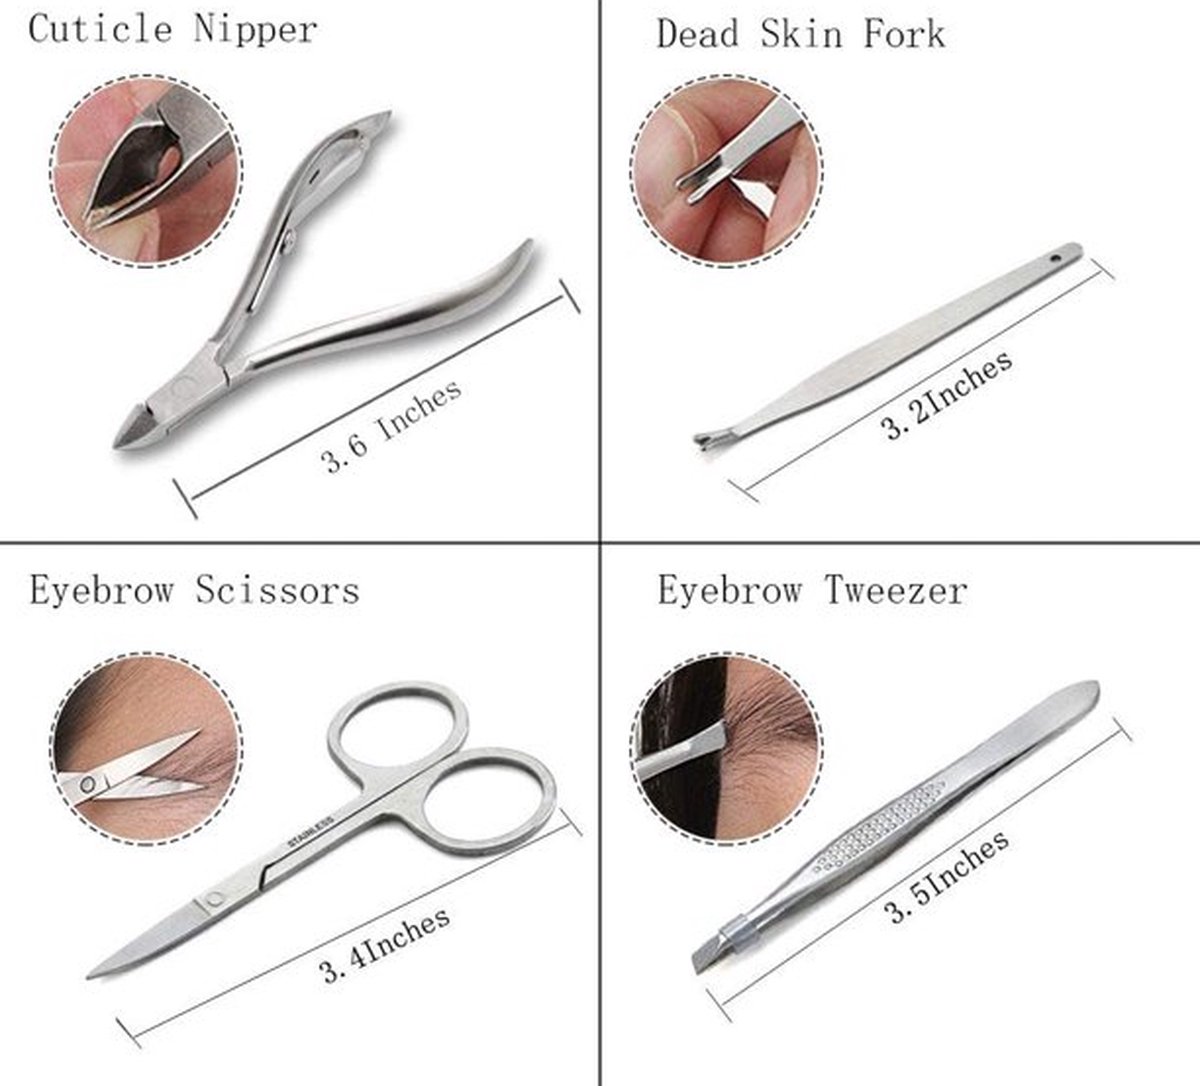 Manicureset Professionele nagelknipper Kit Pedicure Care Tools - Roestvrij staal Grooming Kit 12-delig voor reizen of thuis (roze)